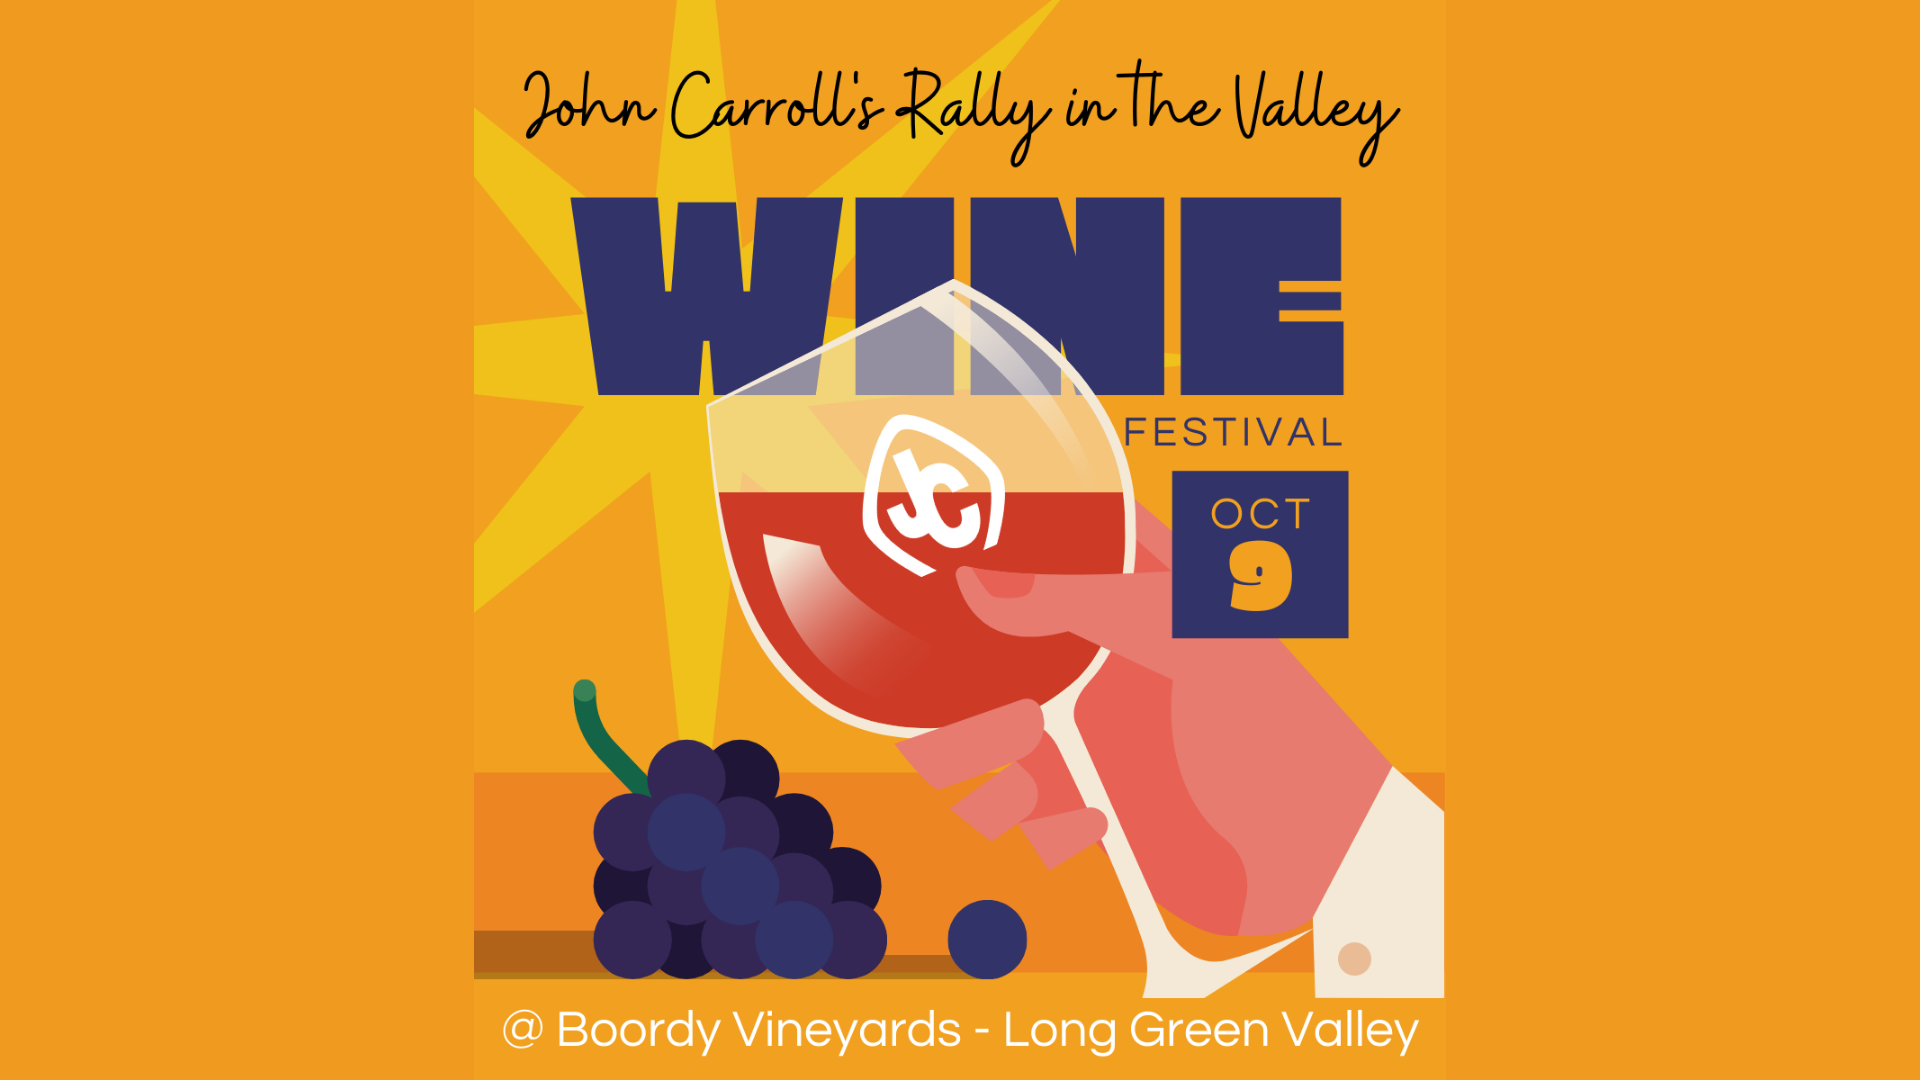 John Carroll's Rally in the Valley Wine Festival The John Carroll School